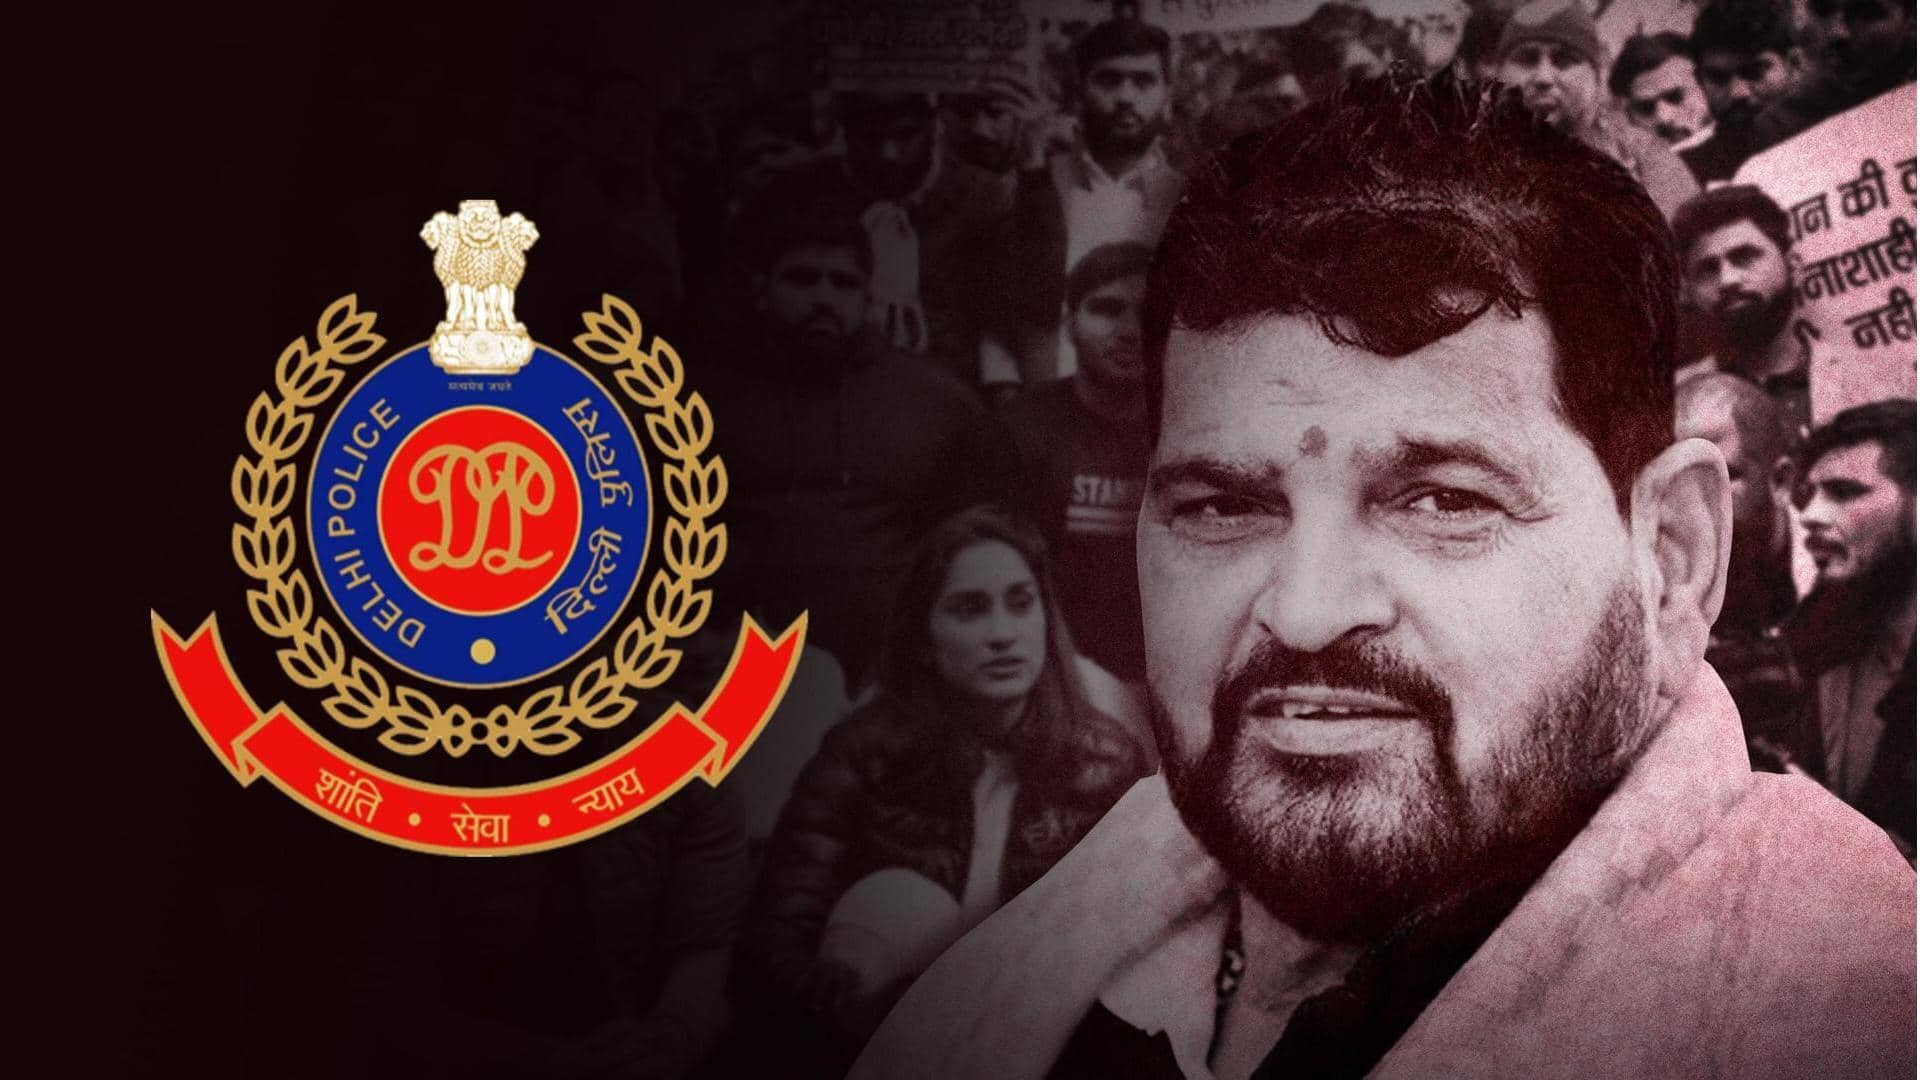 Brij Bhushan harassed wrestlers at every opportunity: Delhi Police